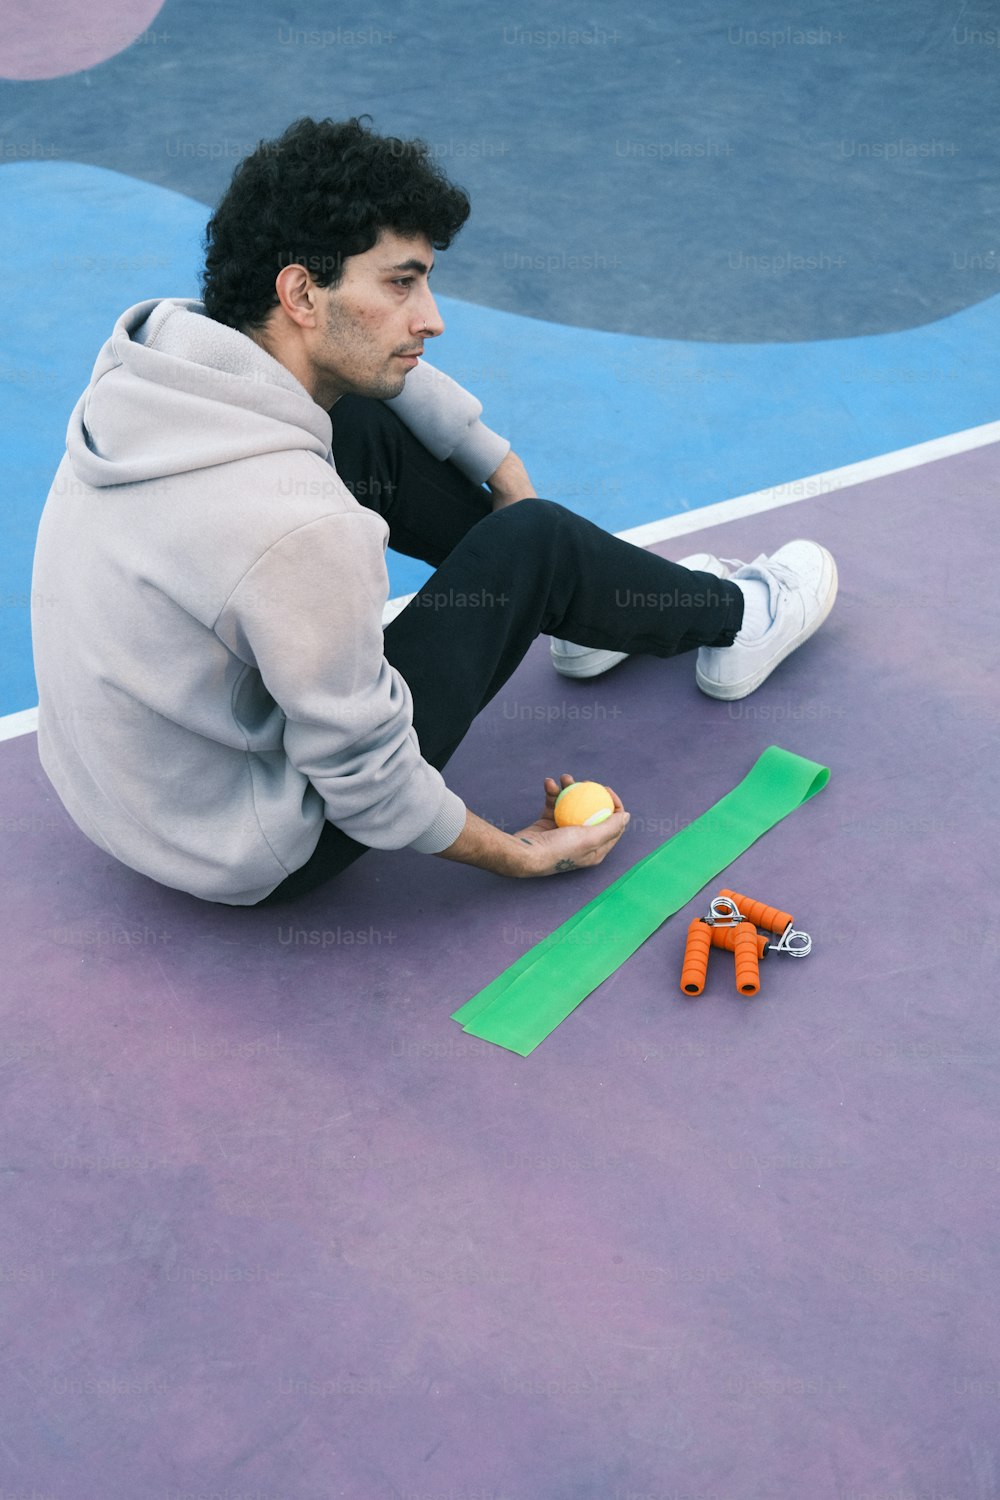 a man sitting on a tennis court holding a tennis ball